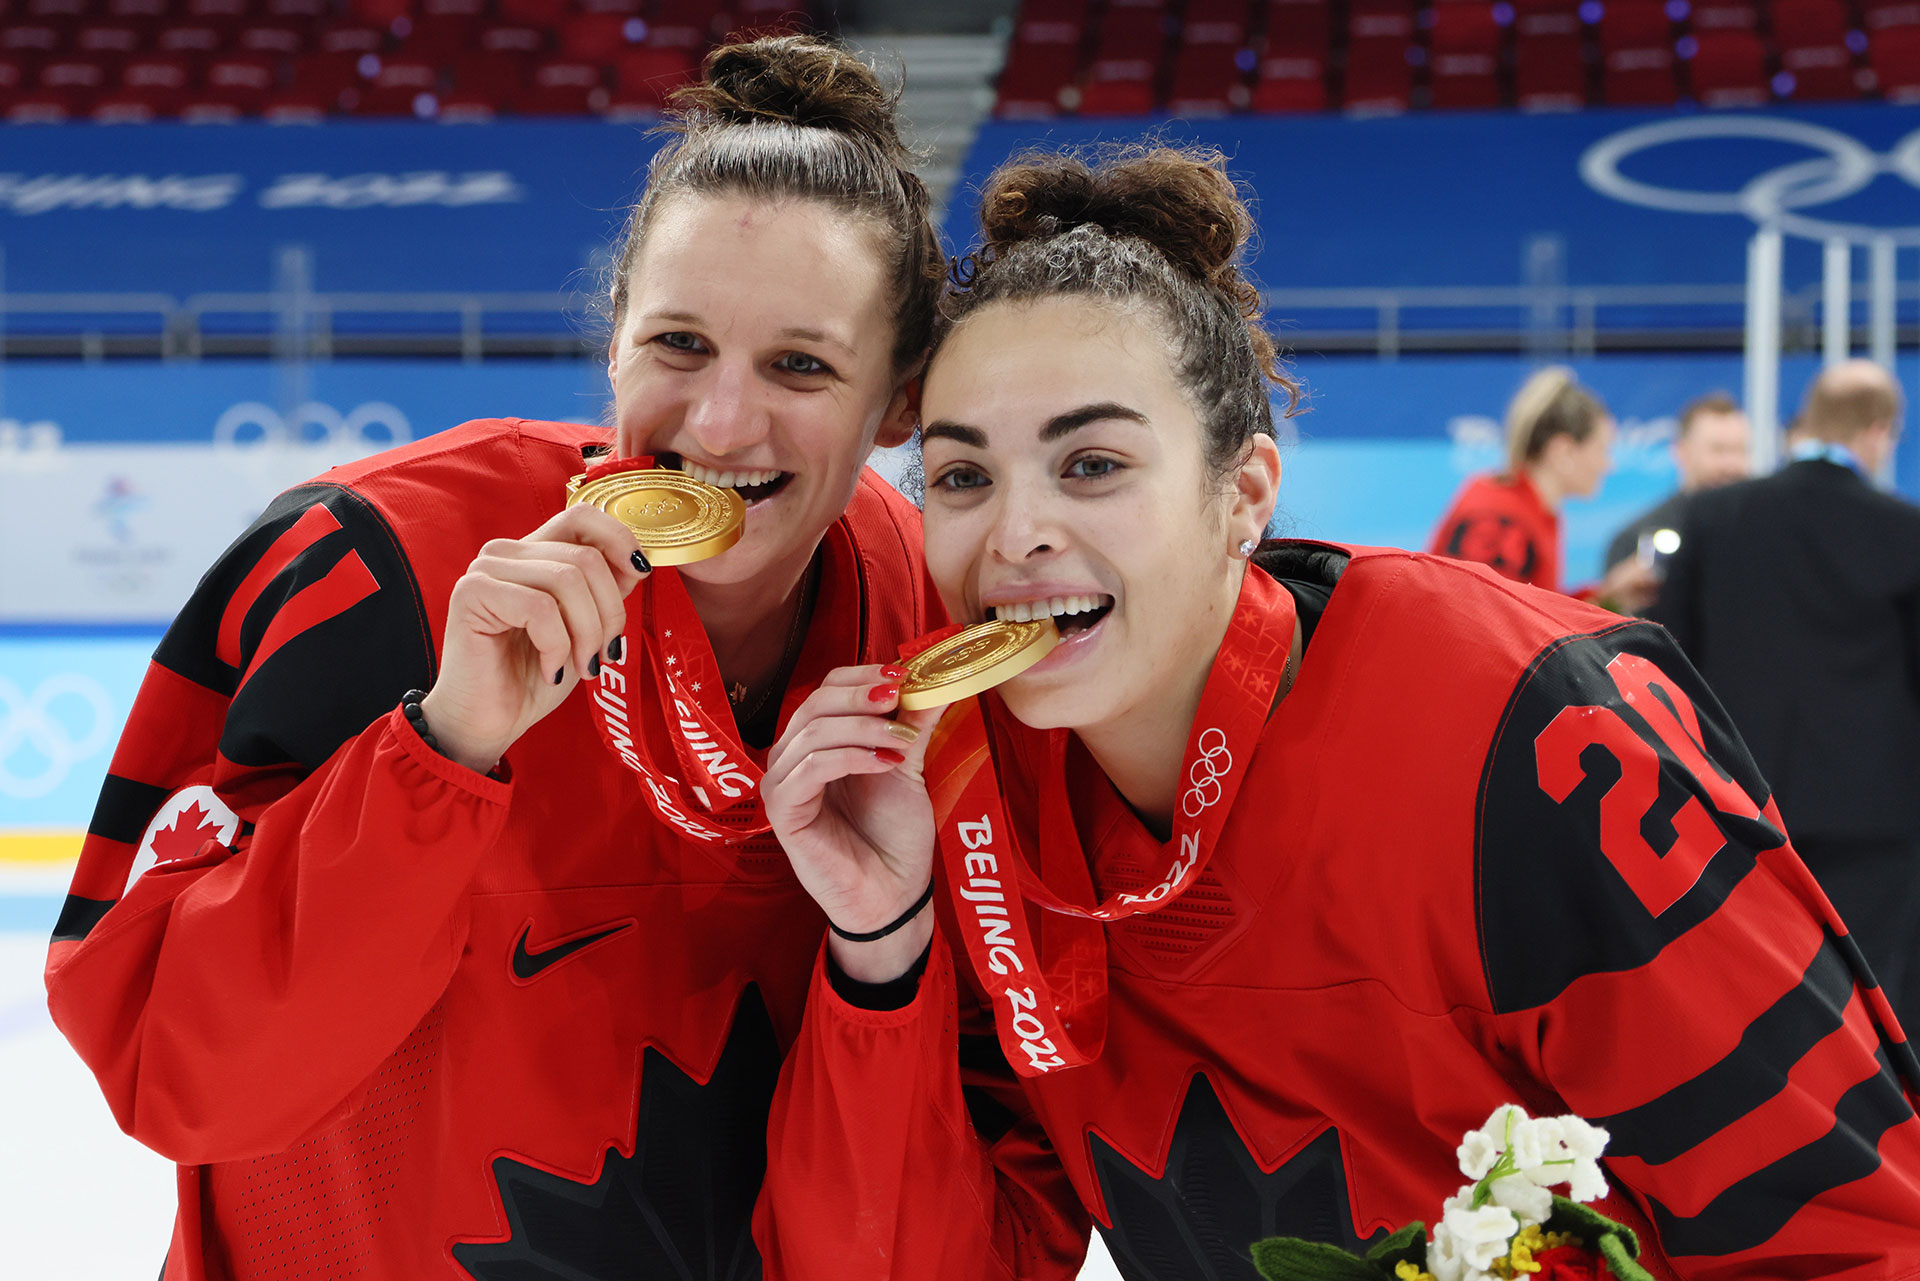 RAW VIDEO: Toronto fans react to Team Canada women's hockey gold